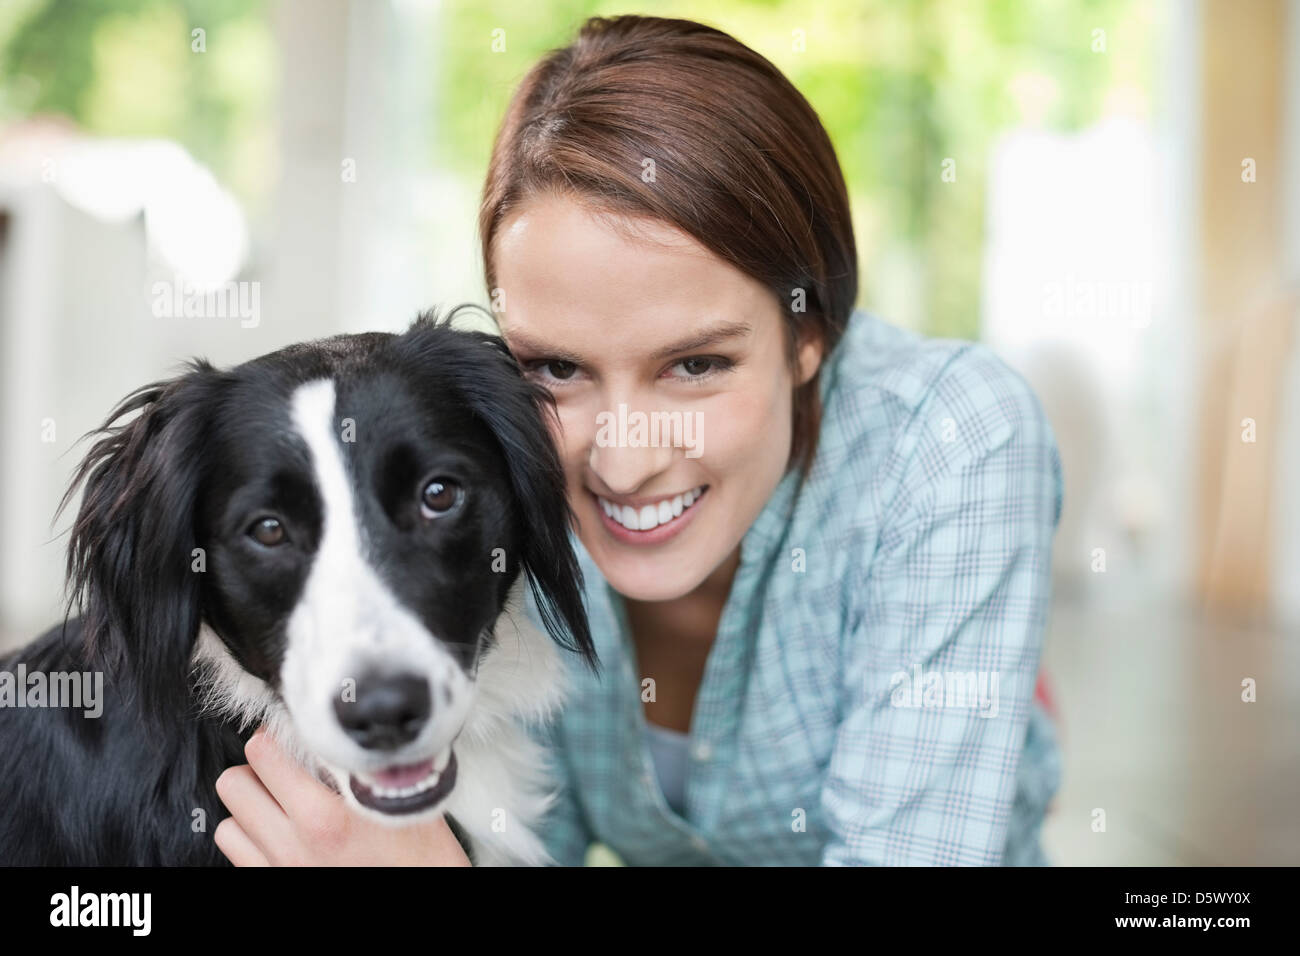 Smiling woman petting dog indoors Stock Photo